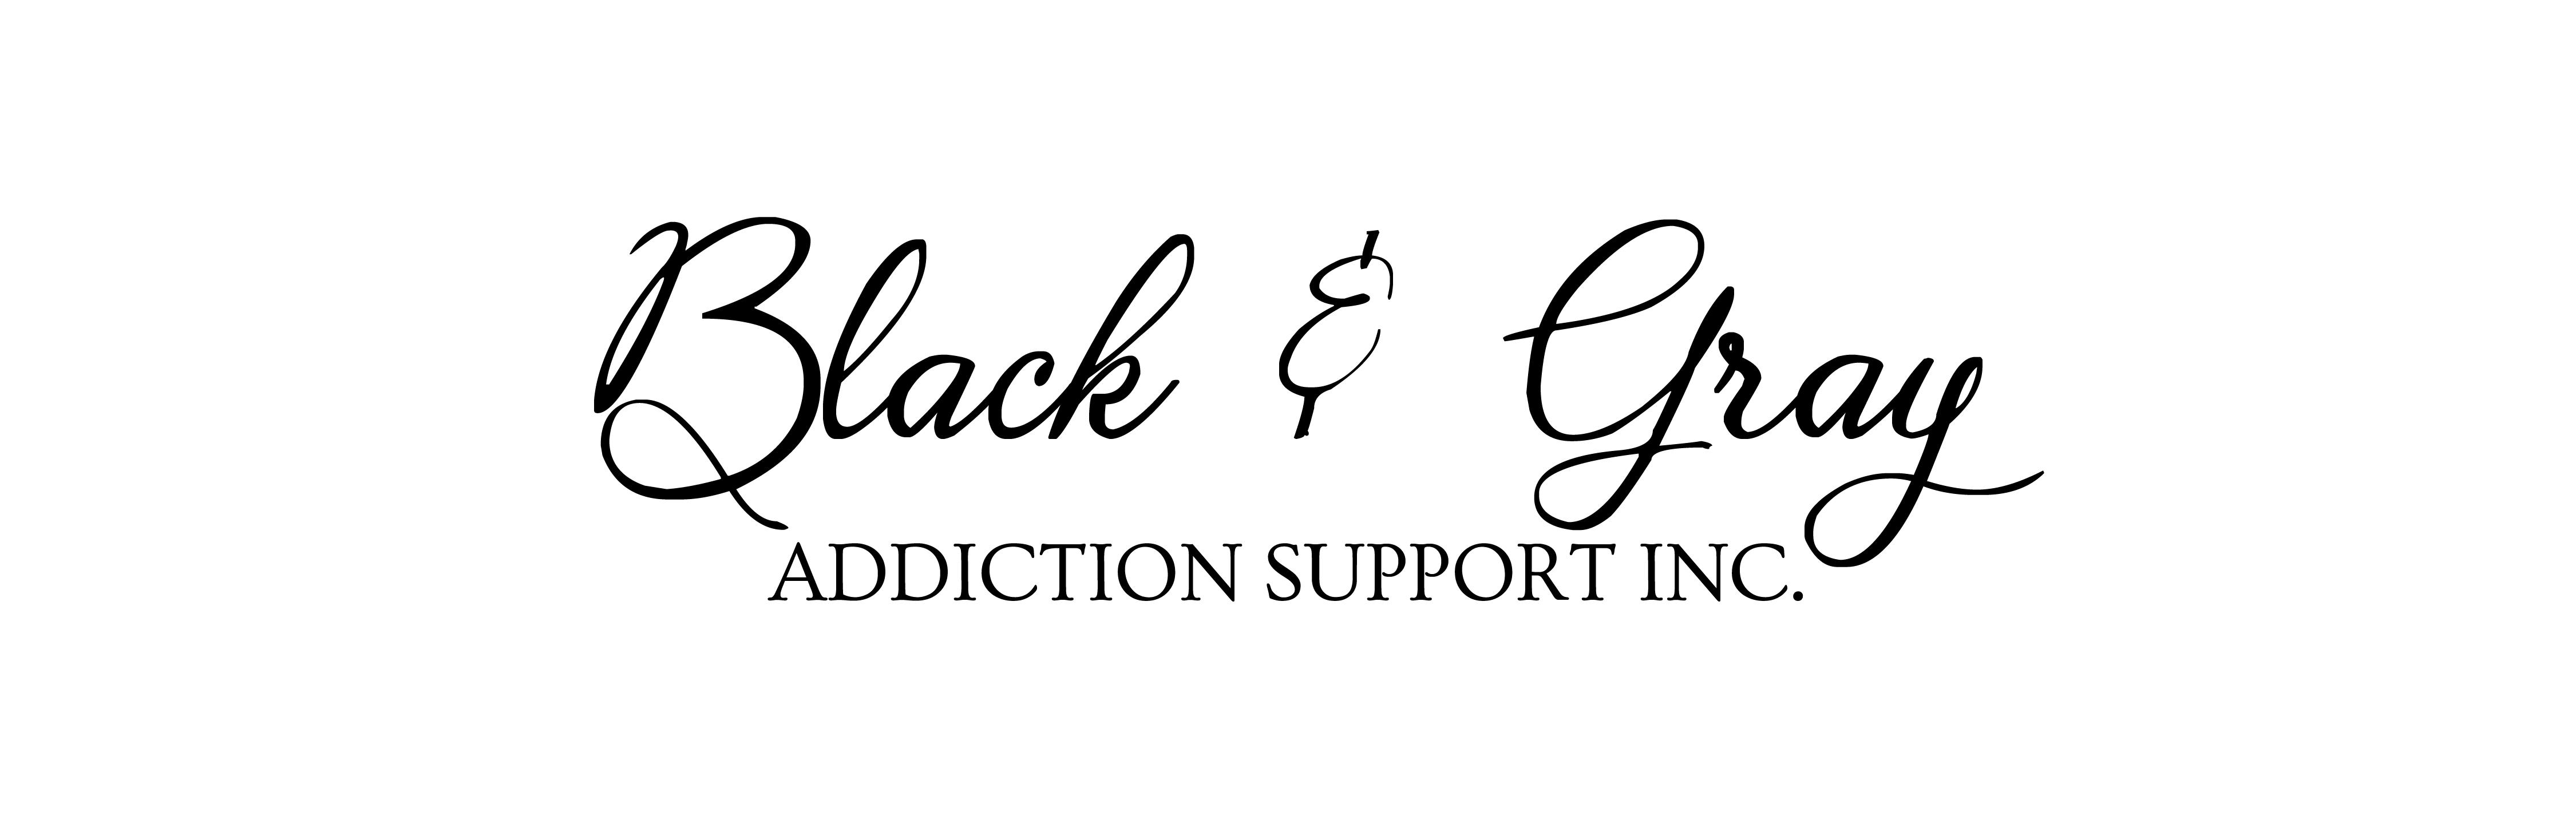 Black & Gray Addiction Support Logo